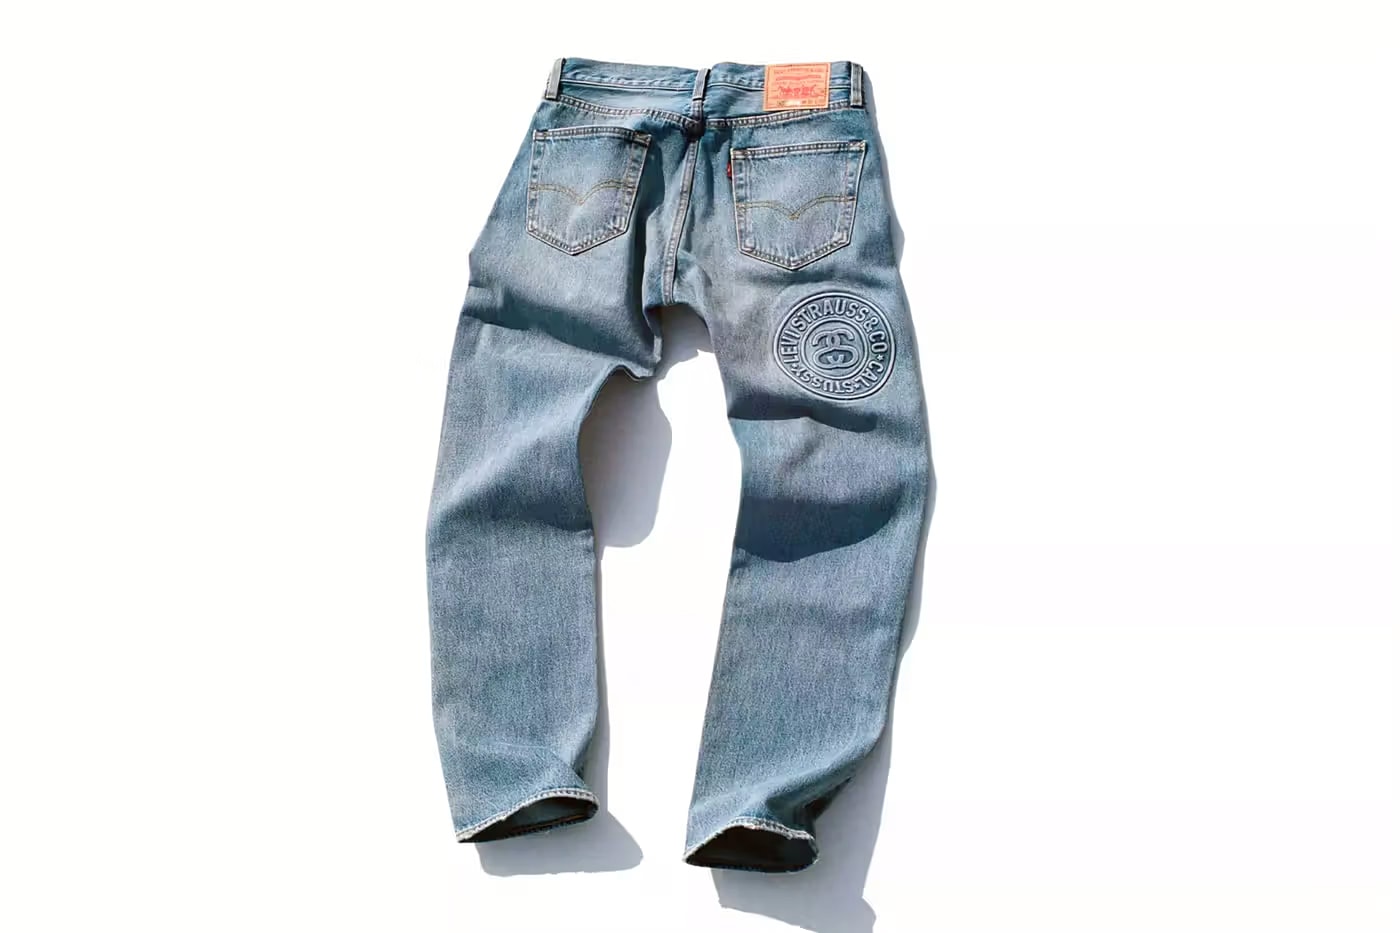 Stussy Levi's Collaboration Denim Jeans Jackets Release Date Images Info